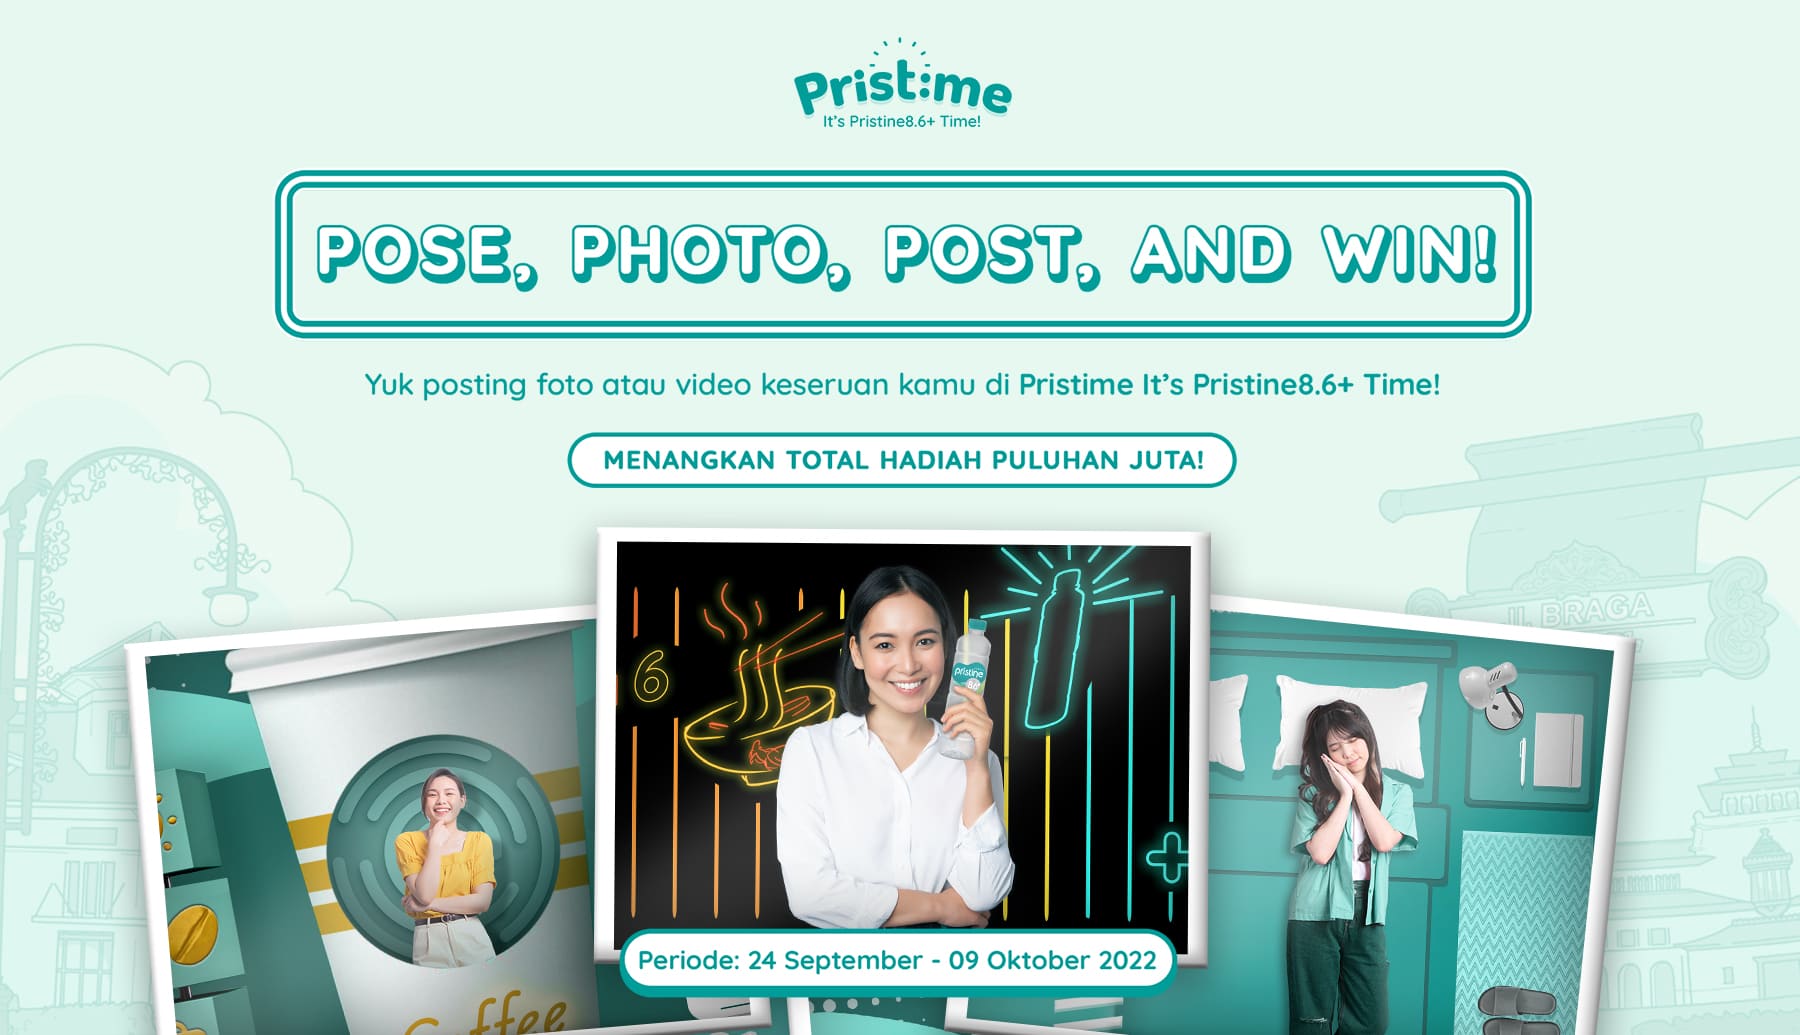 pristime-pose-photo-post-win-competition